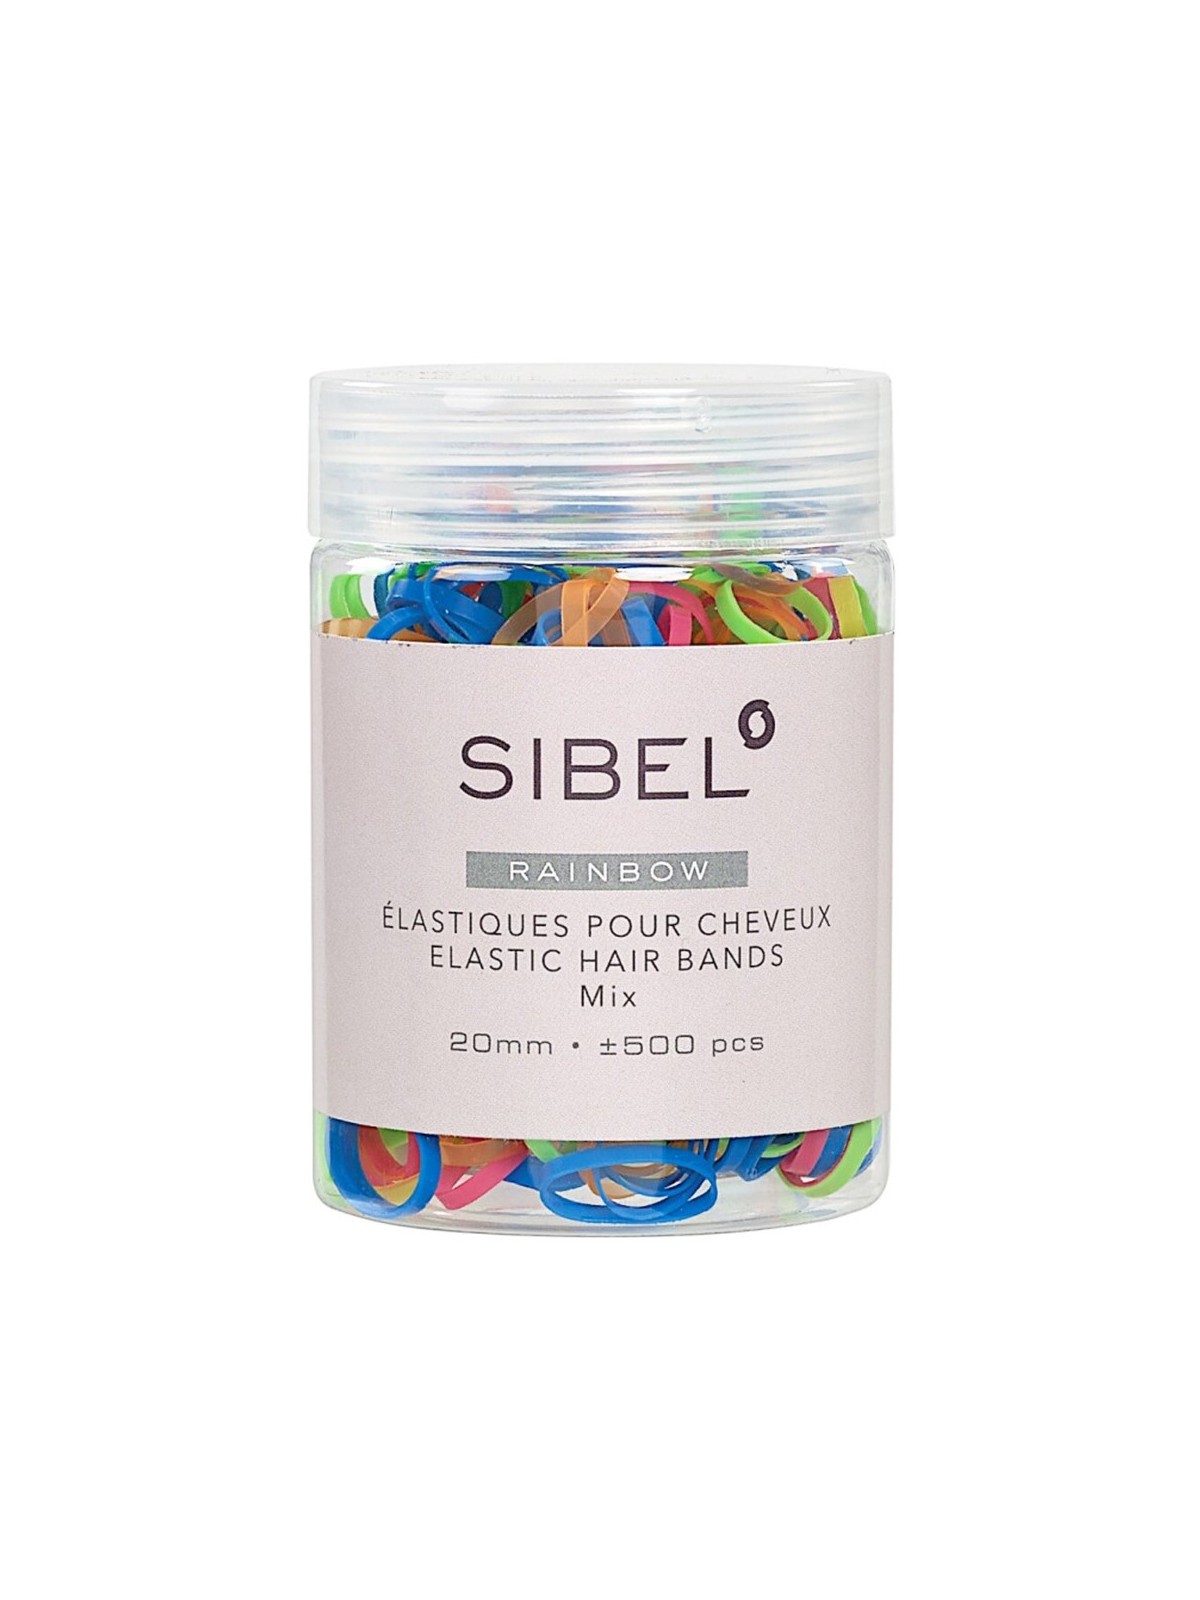 Sibel Rainbow Colored Elastic Hair Bands 500pcs